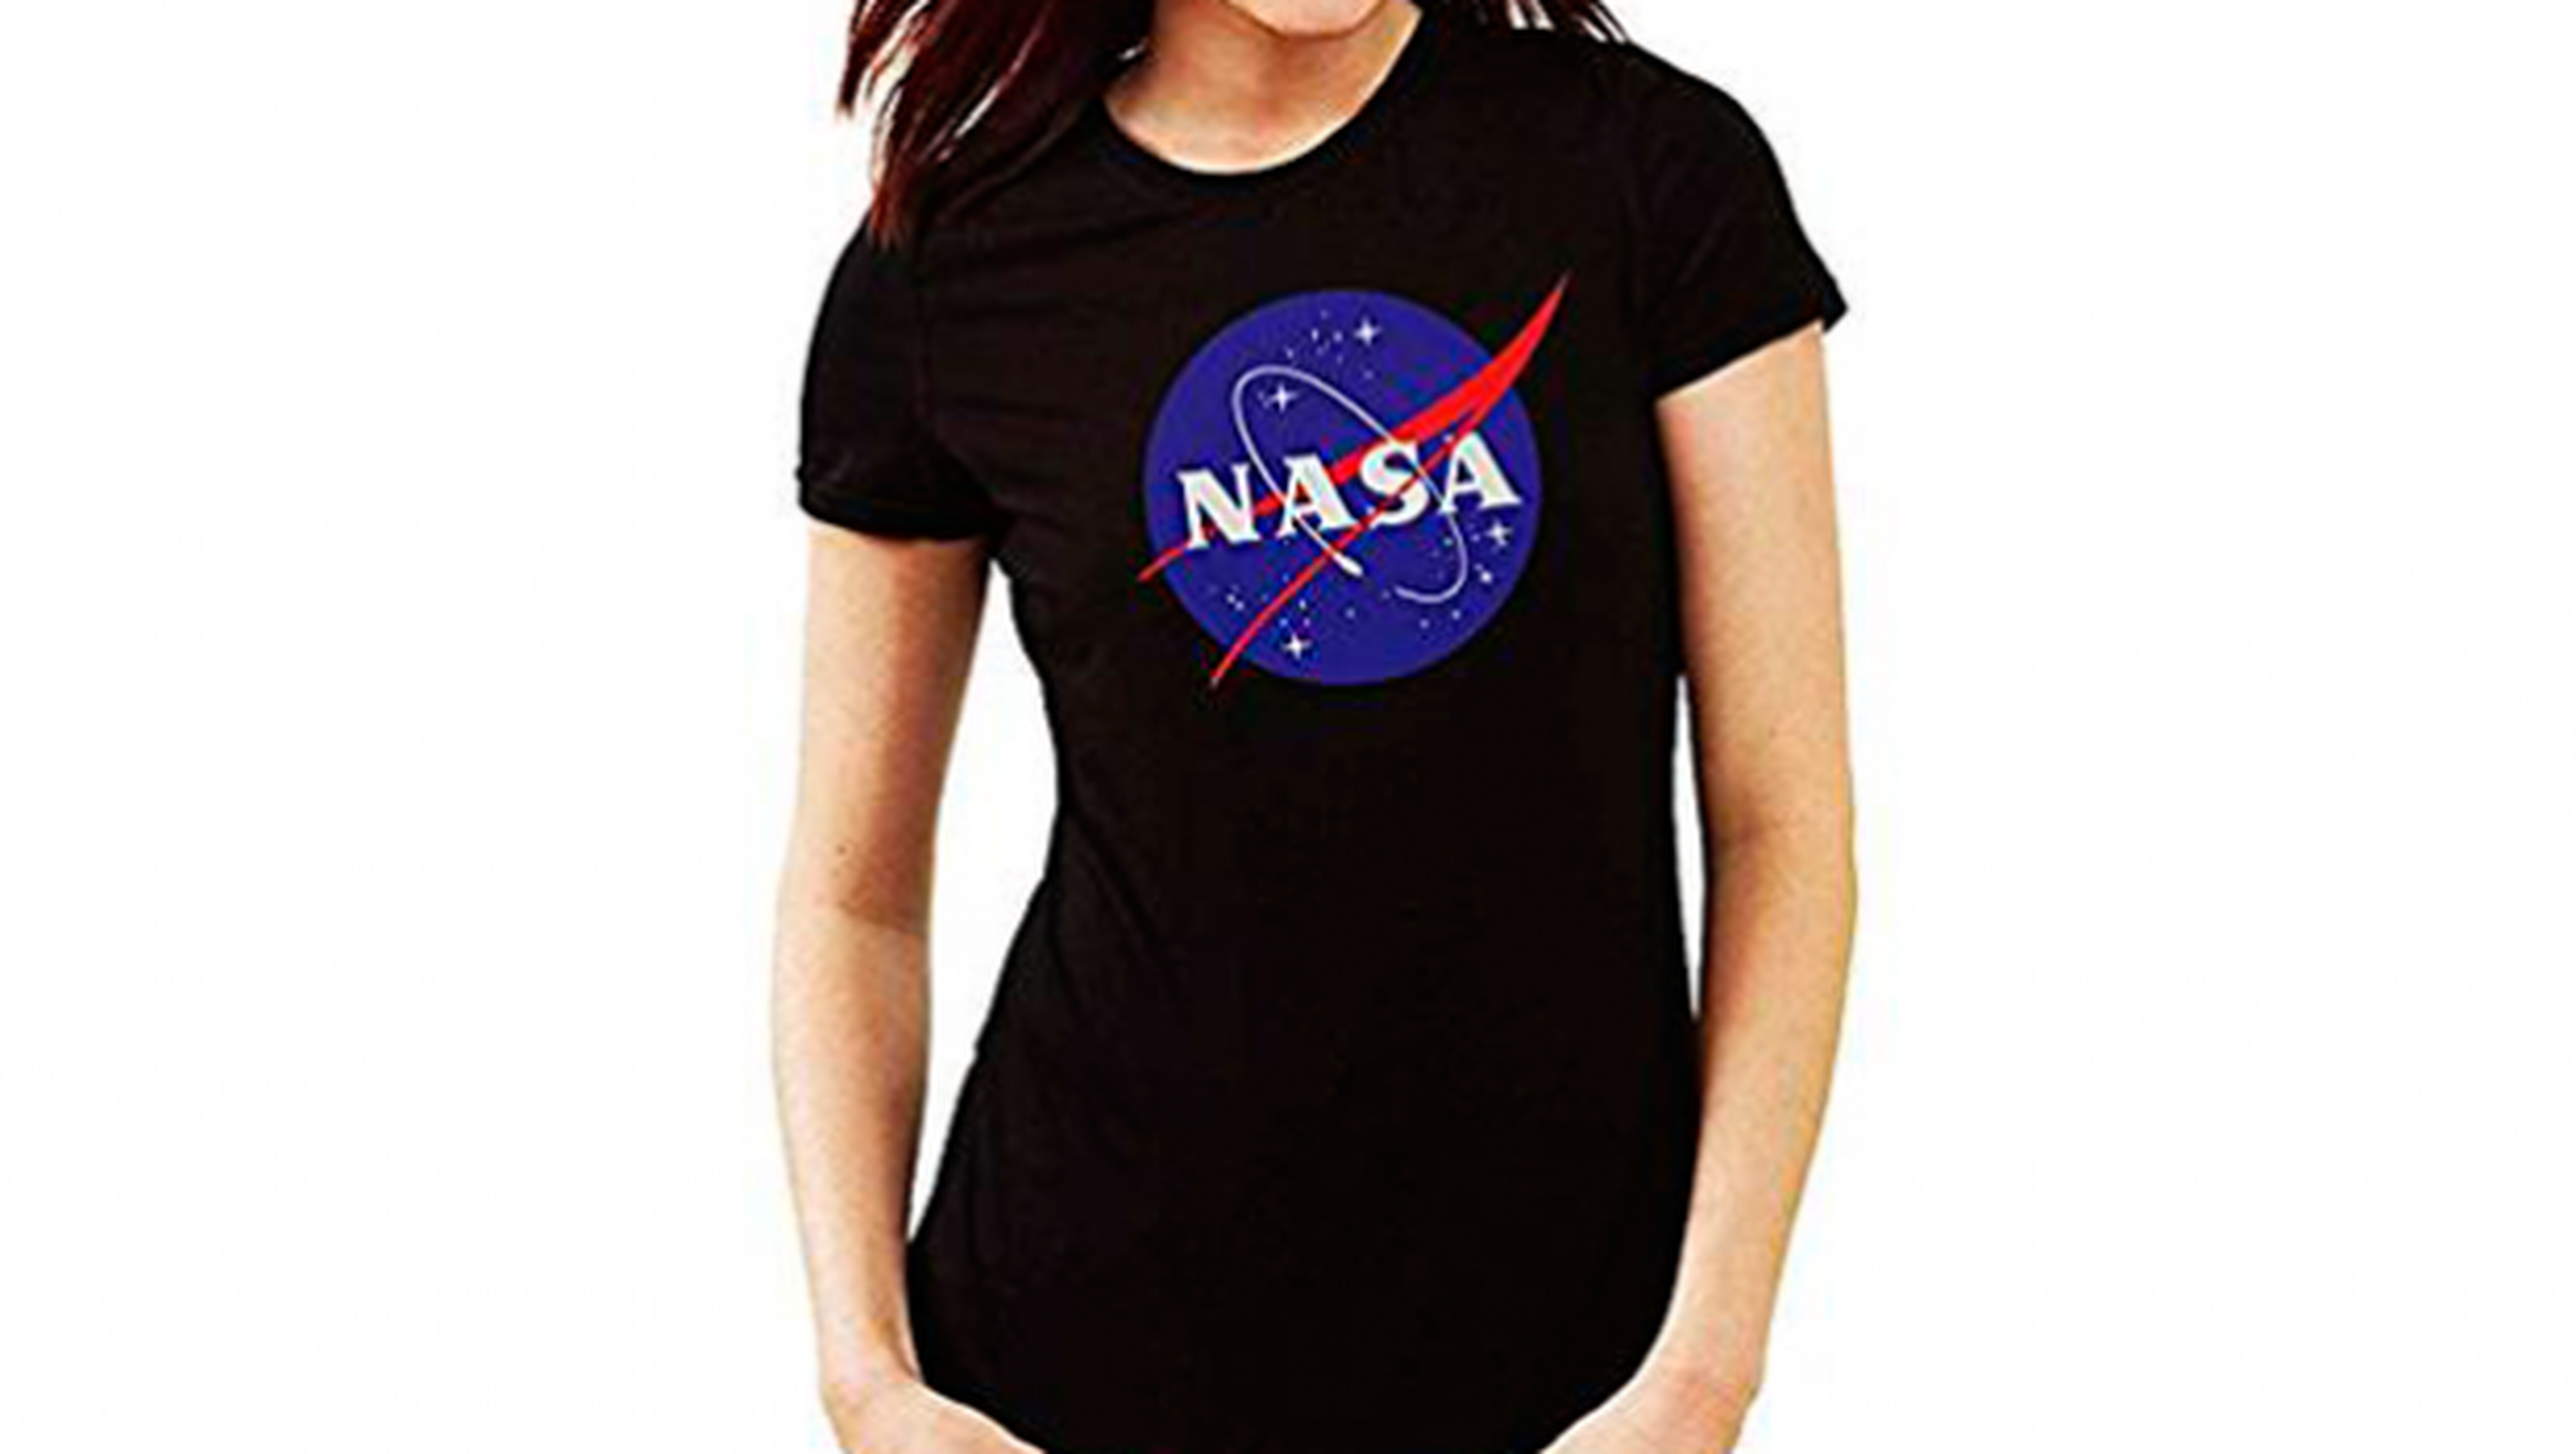 Camiseta NASA mujer amazon